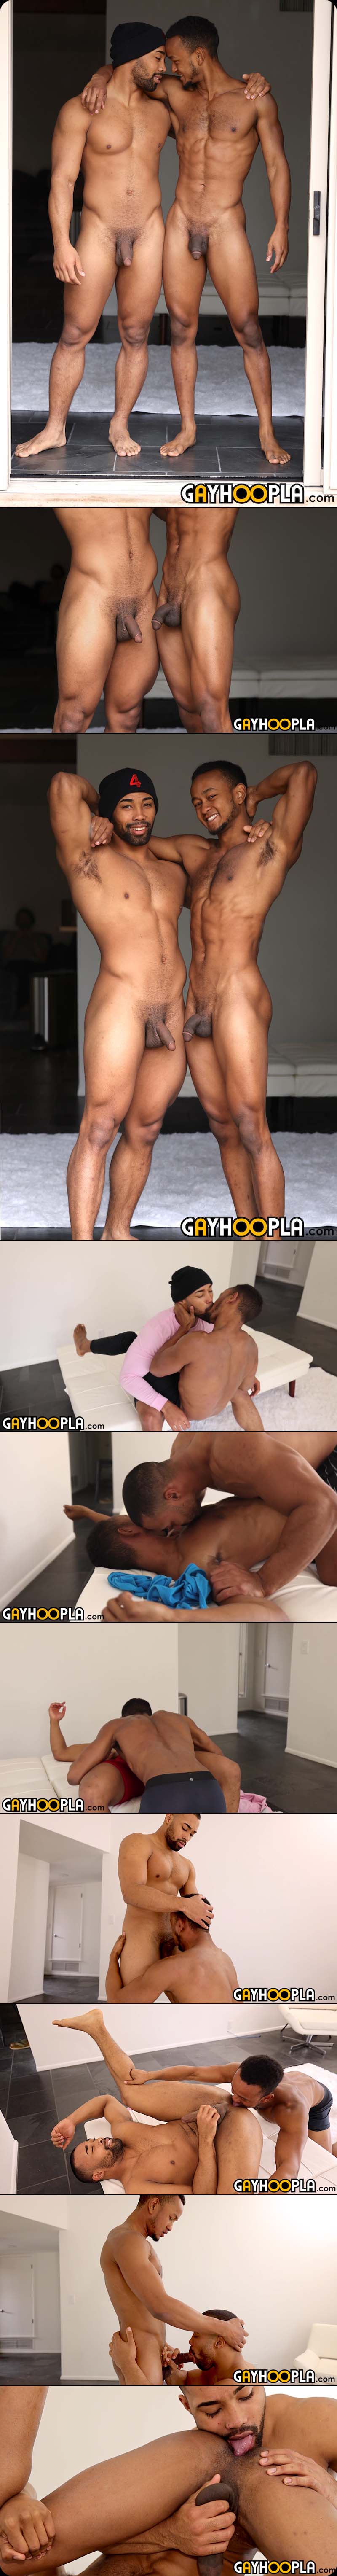 Jaxson Briggs Fucks Athletic Apollo Parker [Two New Studs!] at GayHoopla